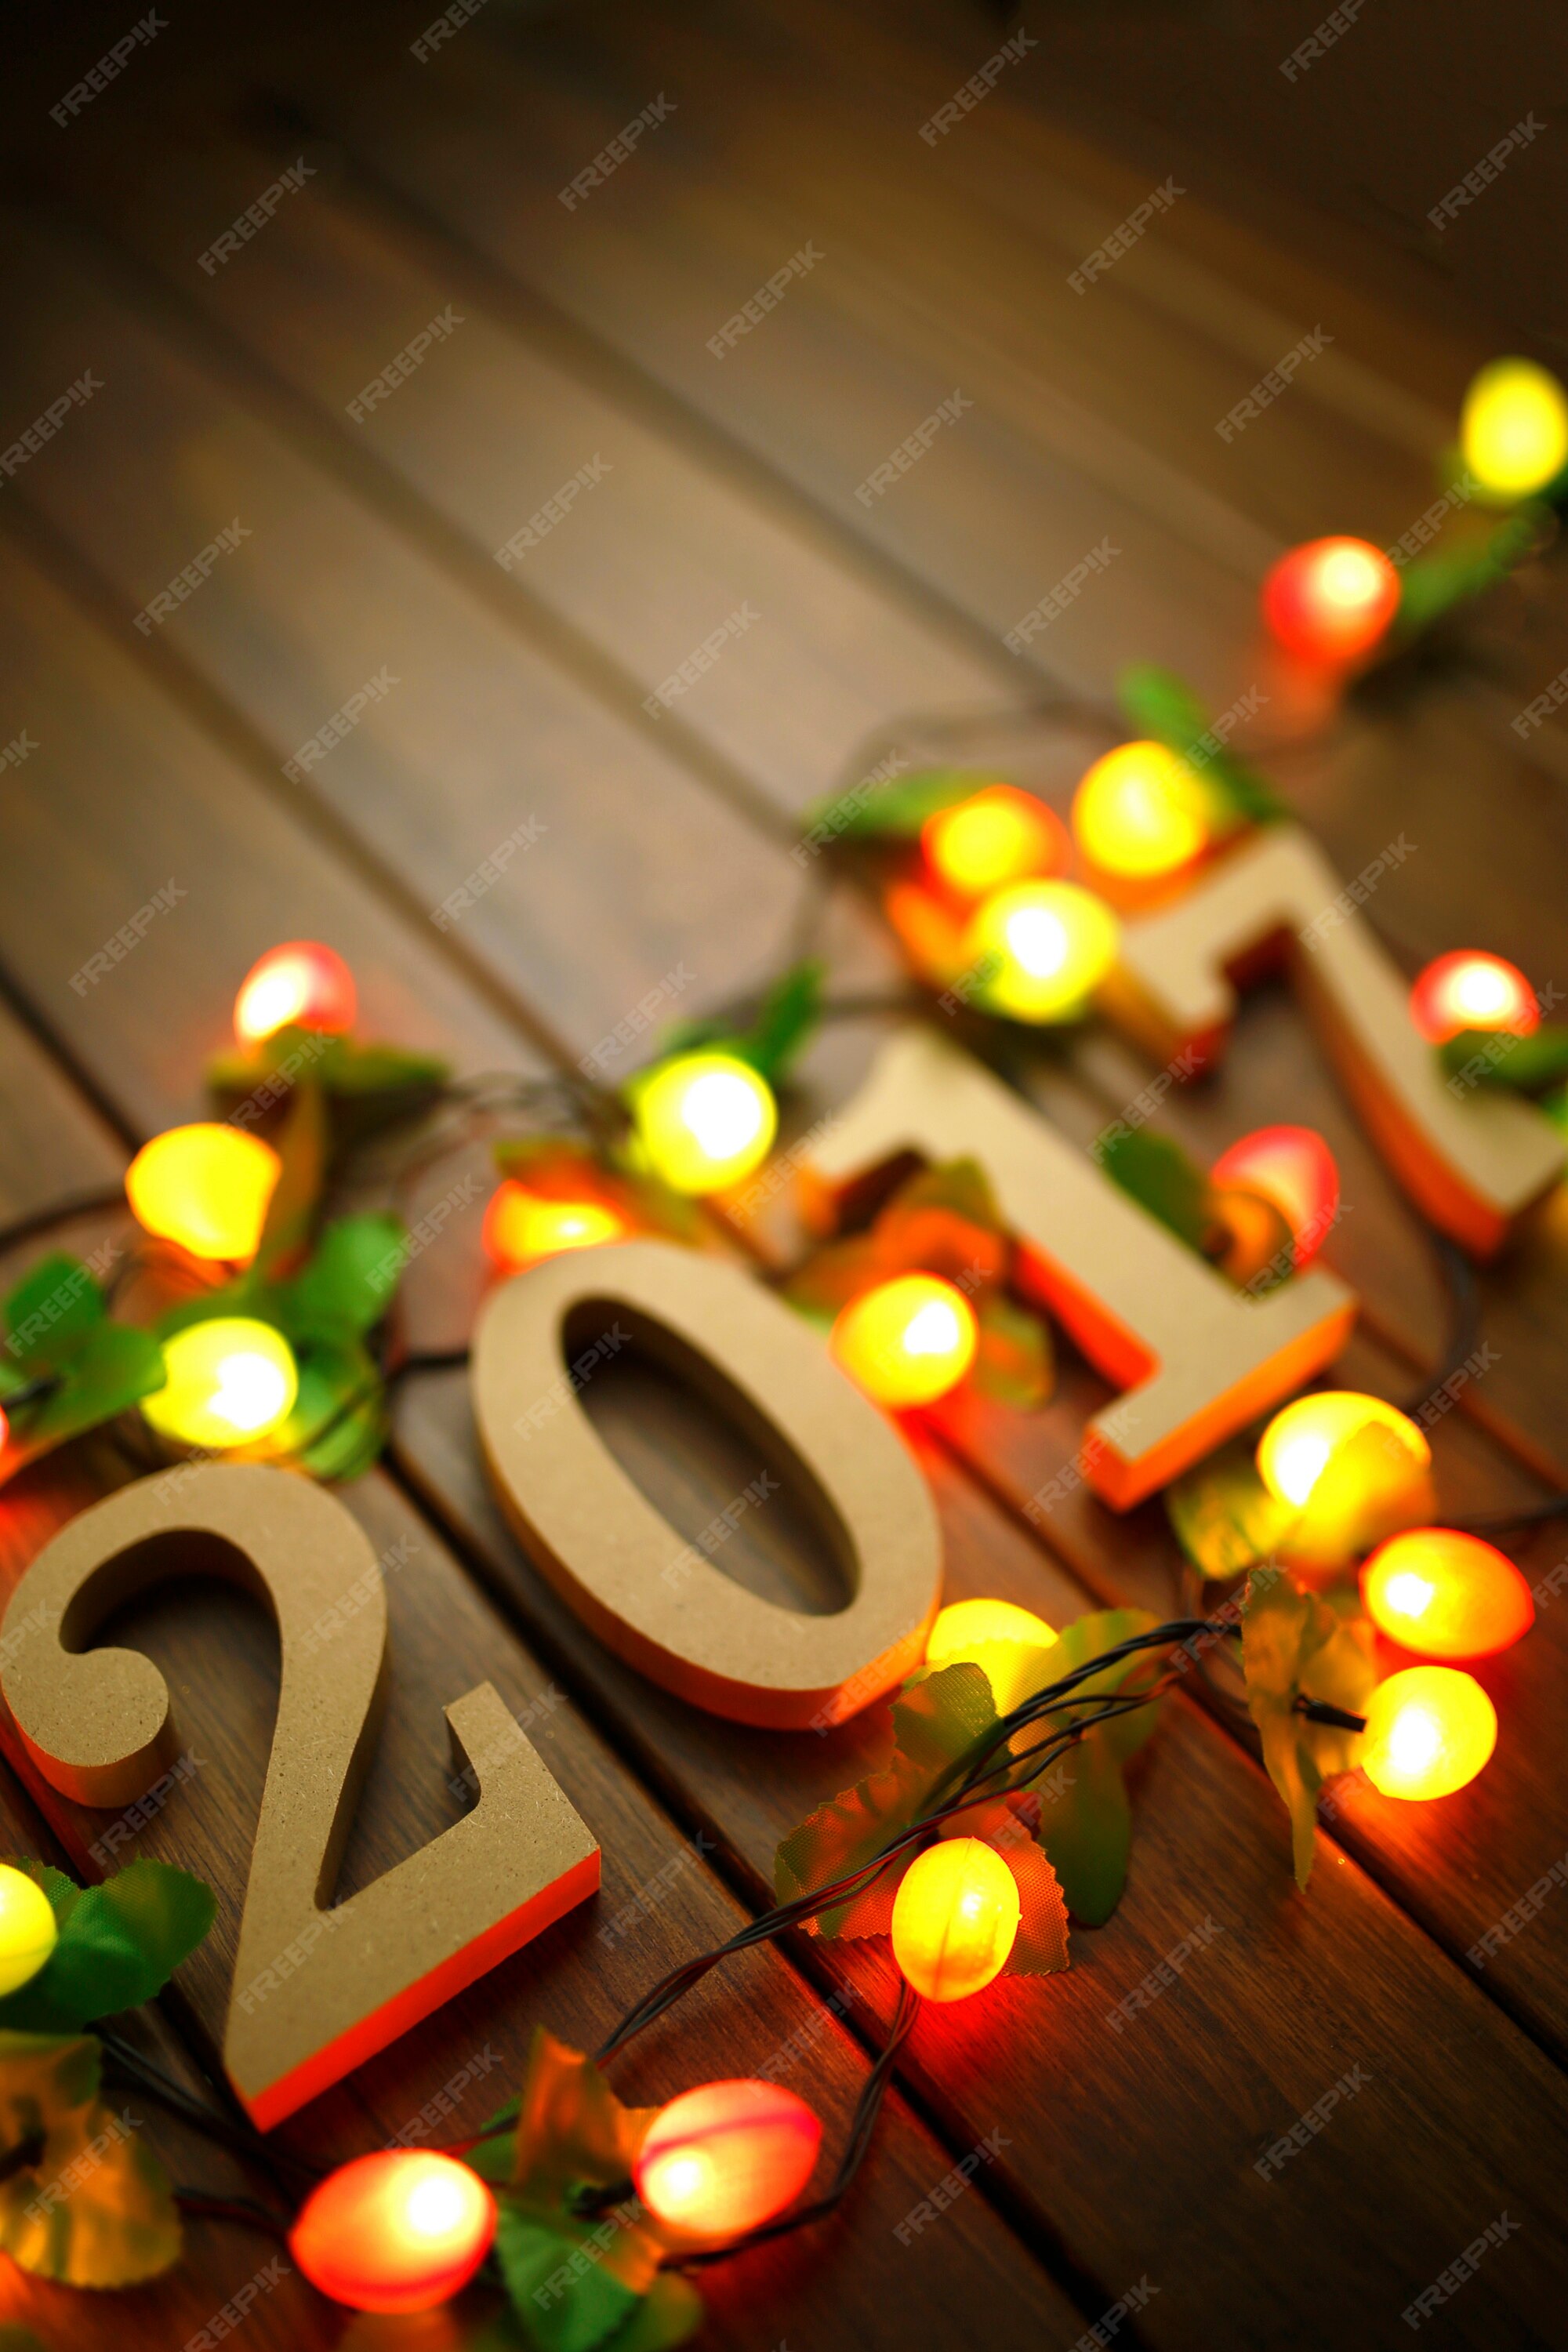 happy new year 2021 flashing images